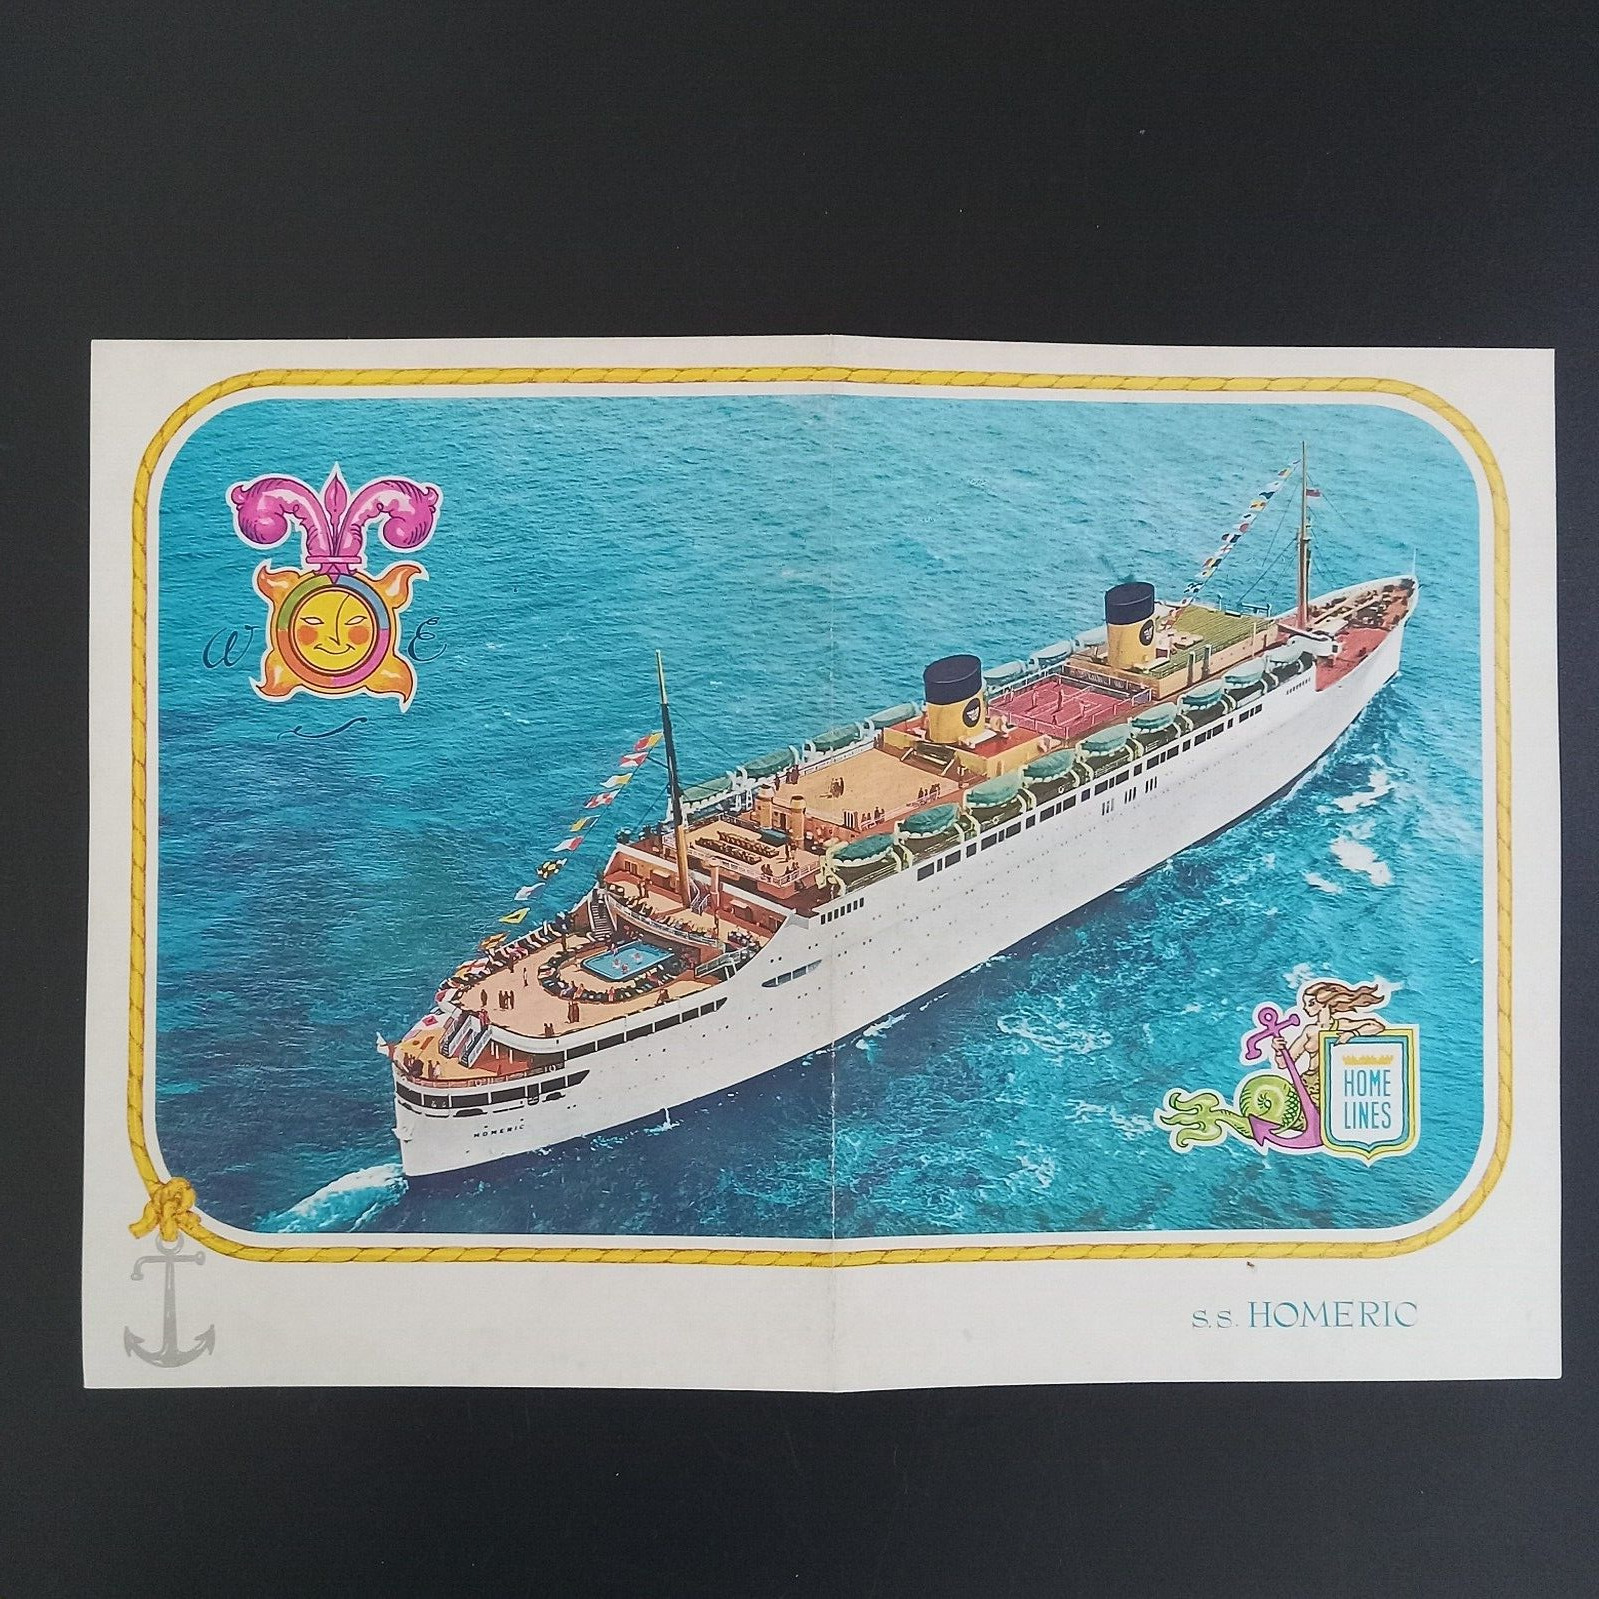 SS HOMERIC Home Lines Sun-Way Cruise Portrait Dinner Menu April 8th, 1973